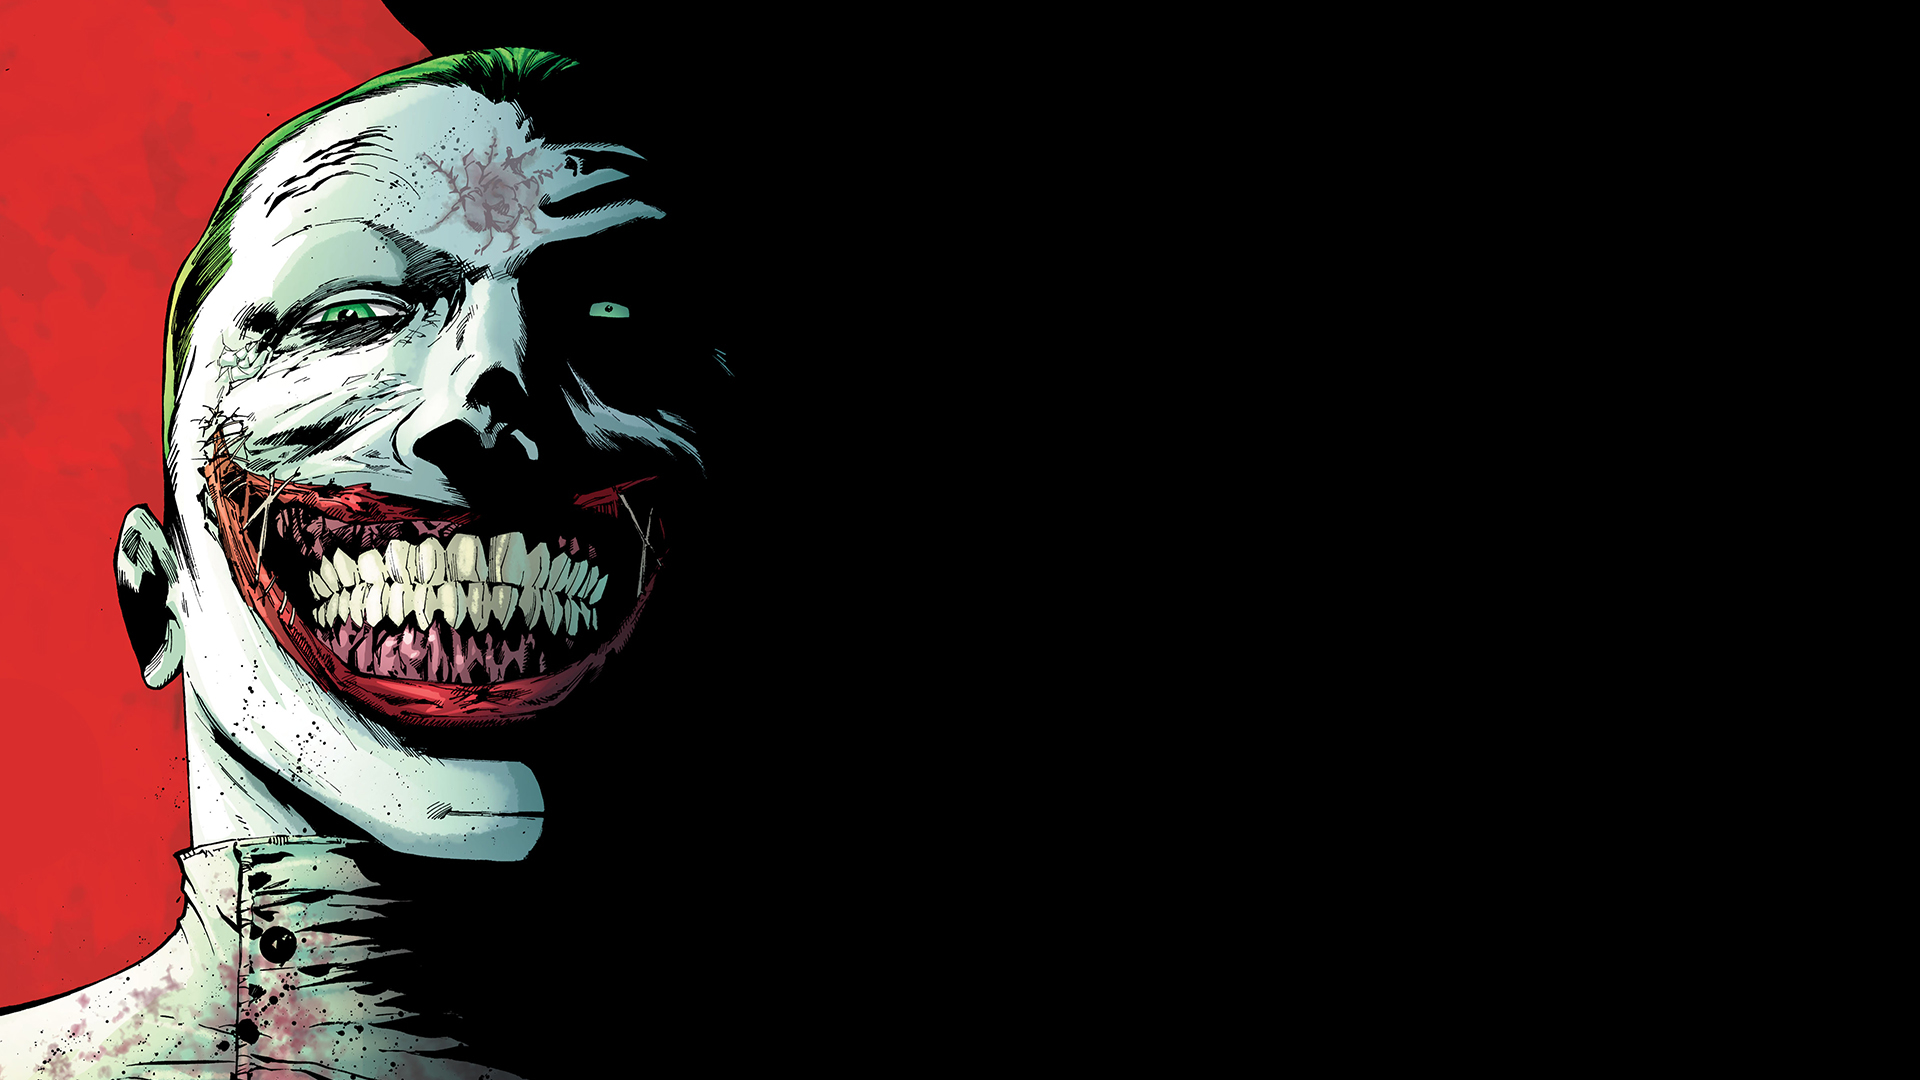 Joker DC Comic Wallpaper, HD Superheroes 4K Wallpapers, Images, Photos and  Background - Wallpapers Den